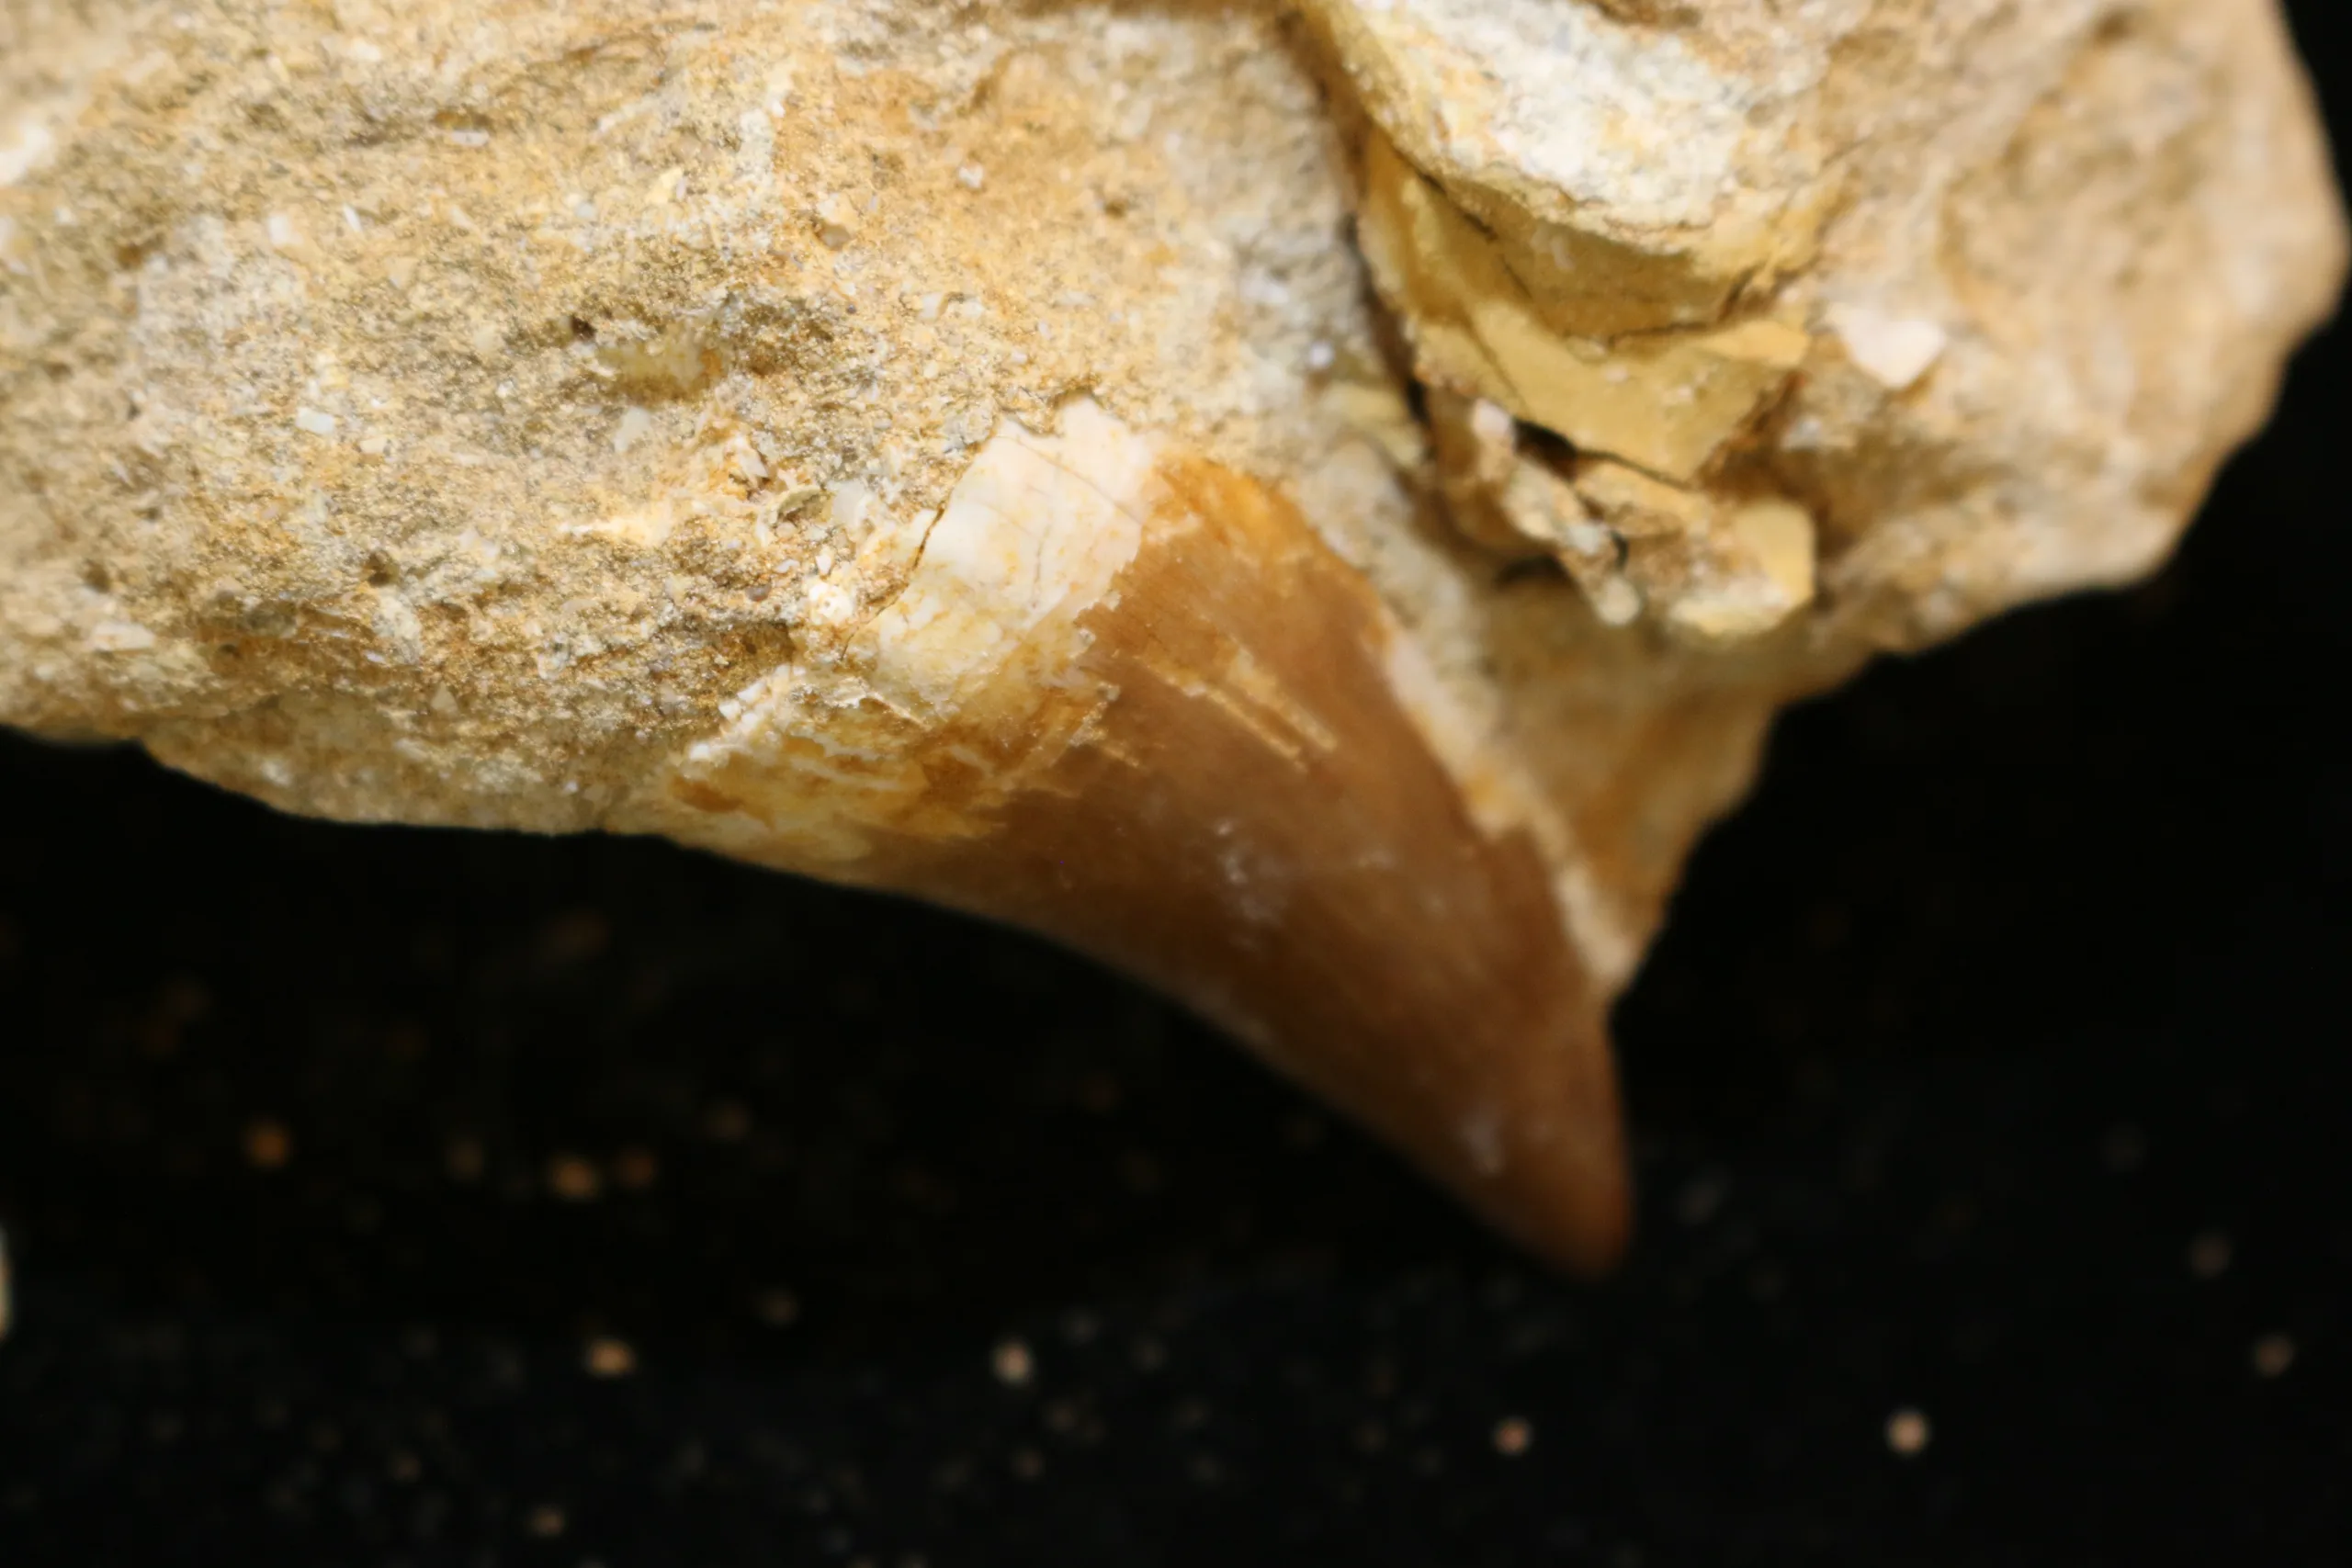 Mosasaur tooth in matrix, Morocco, Natural matrix Prehistoric Online